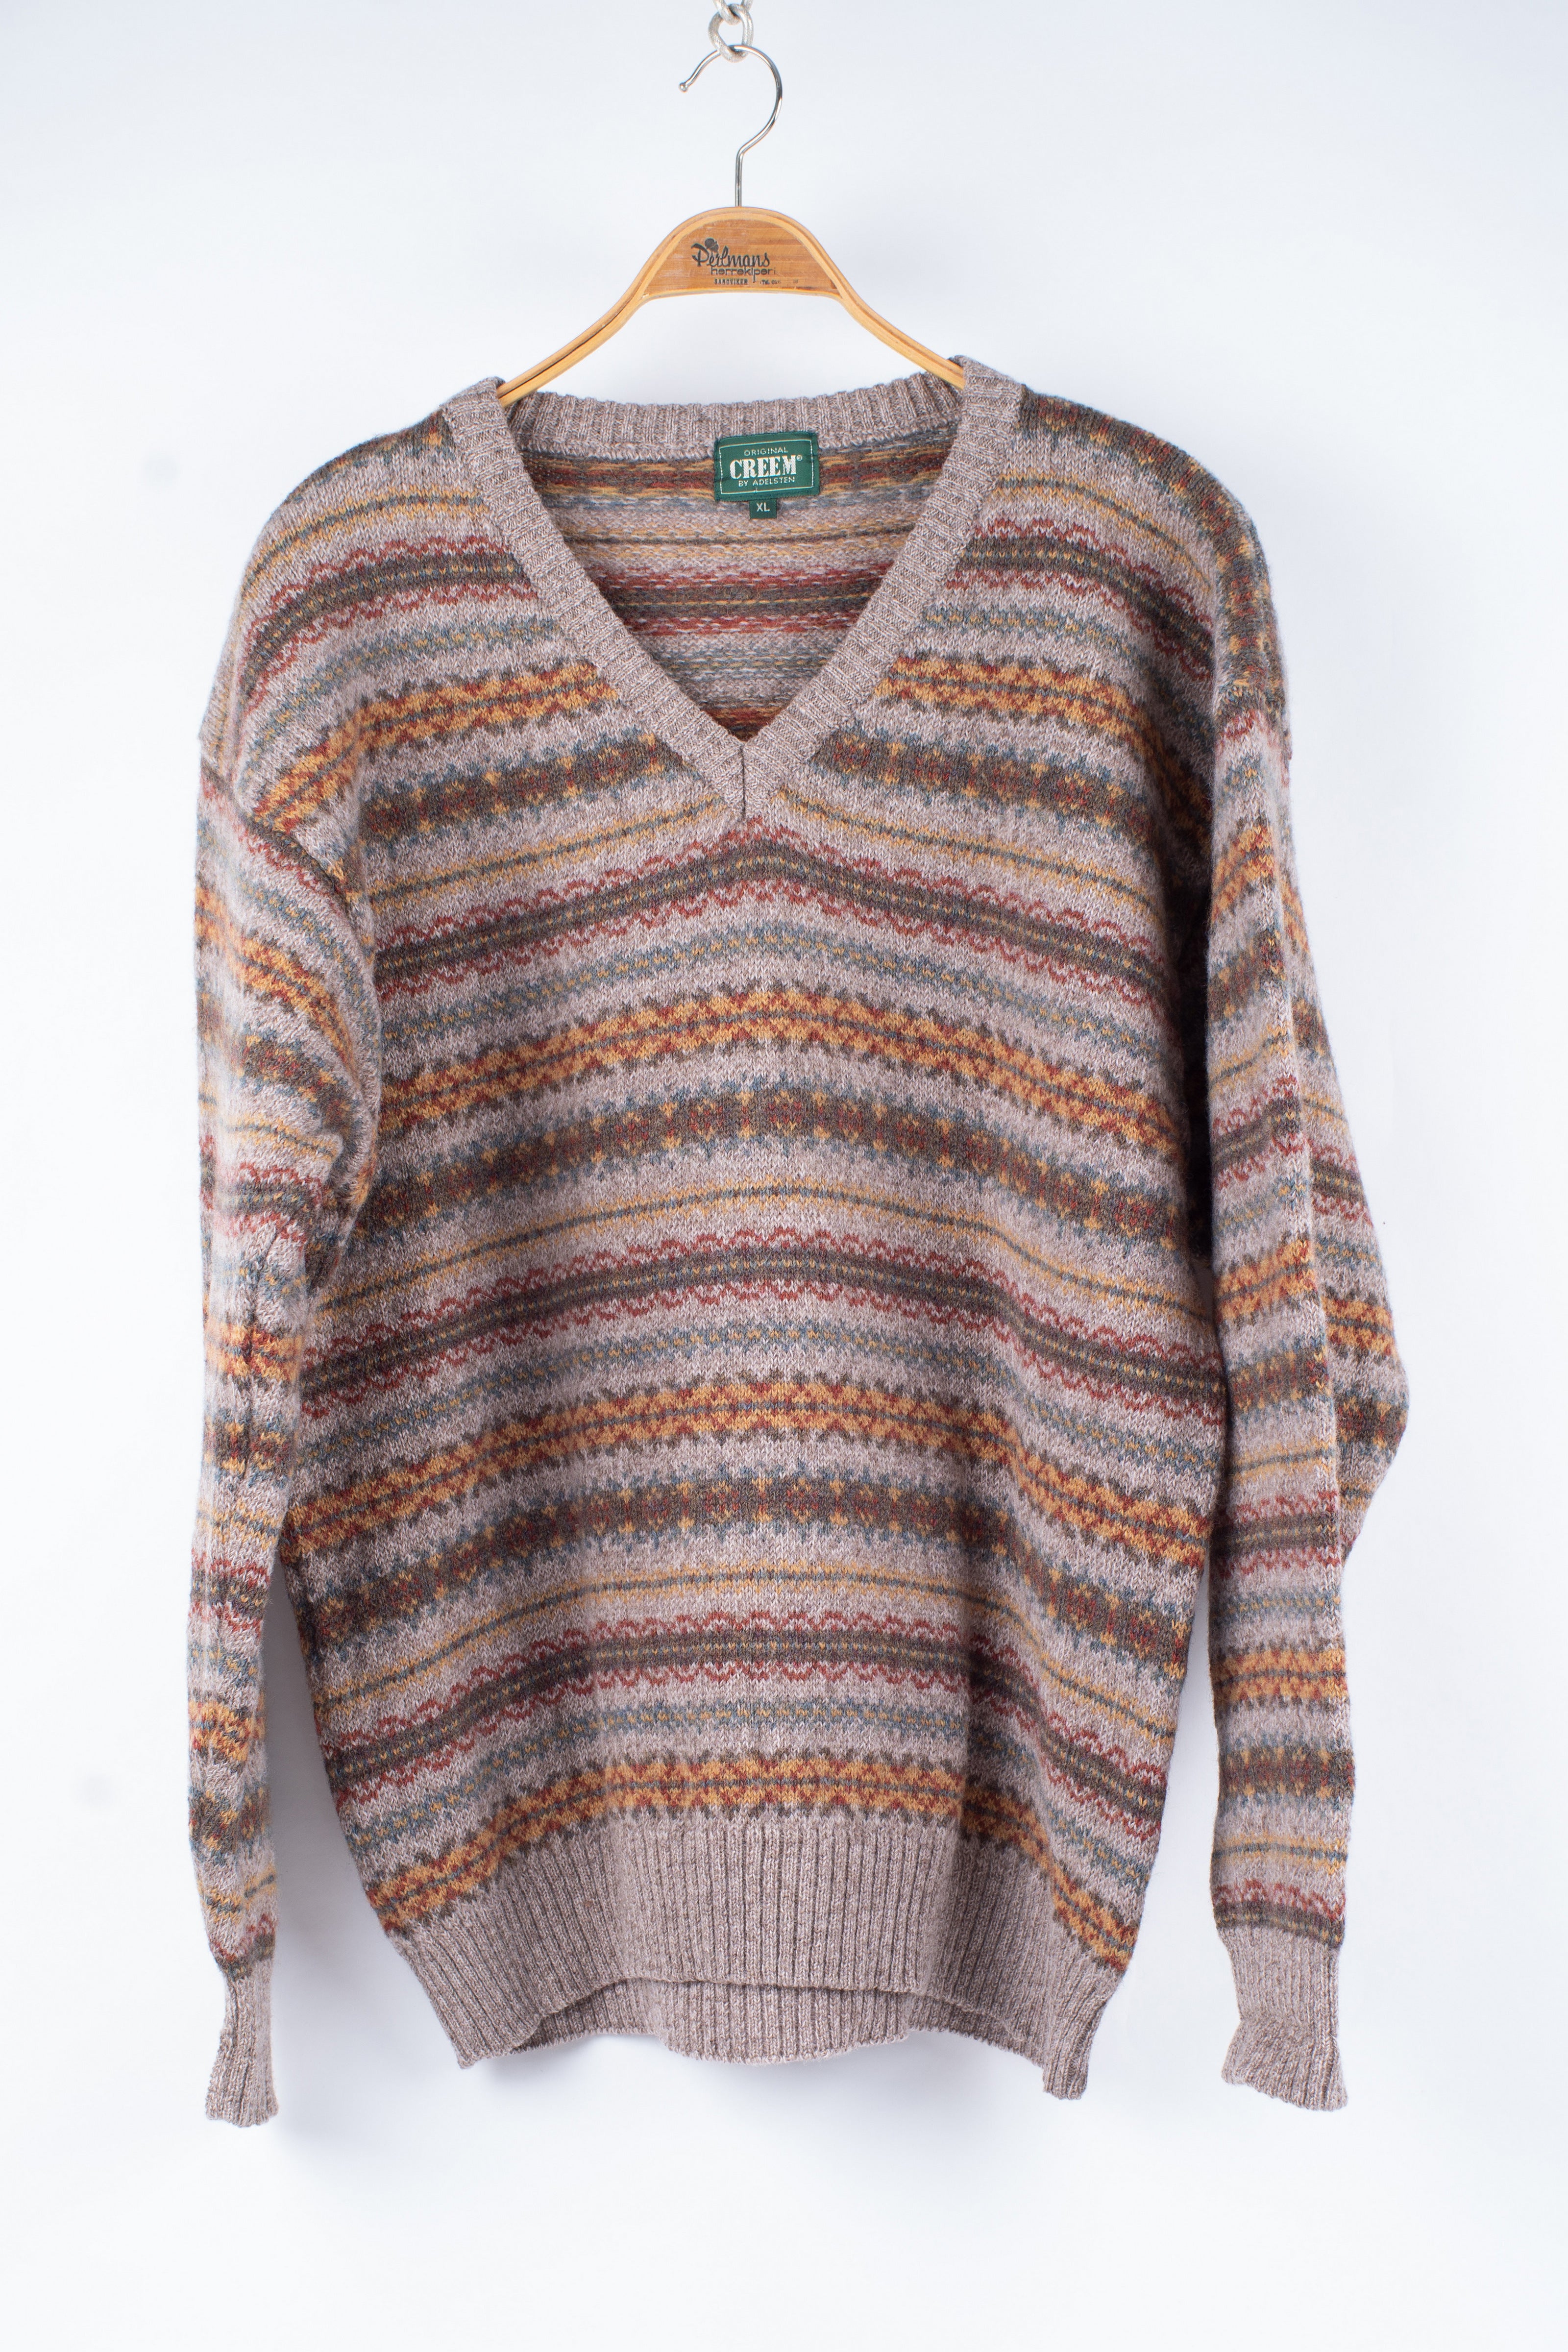 Fair Isle 100% Shetland Wool Men's V-Neck Sweater, XL